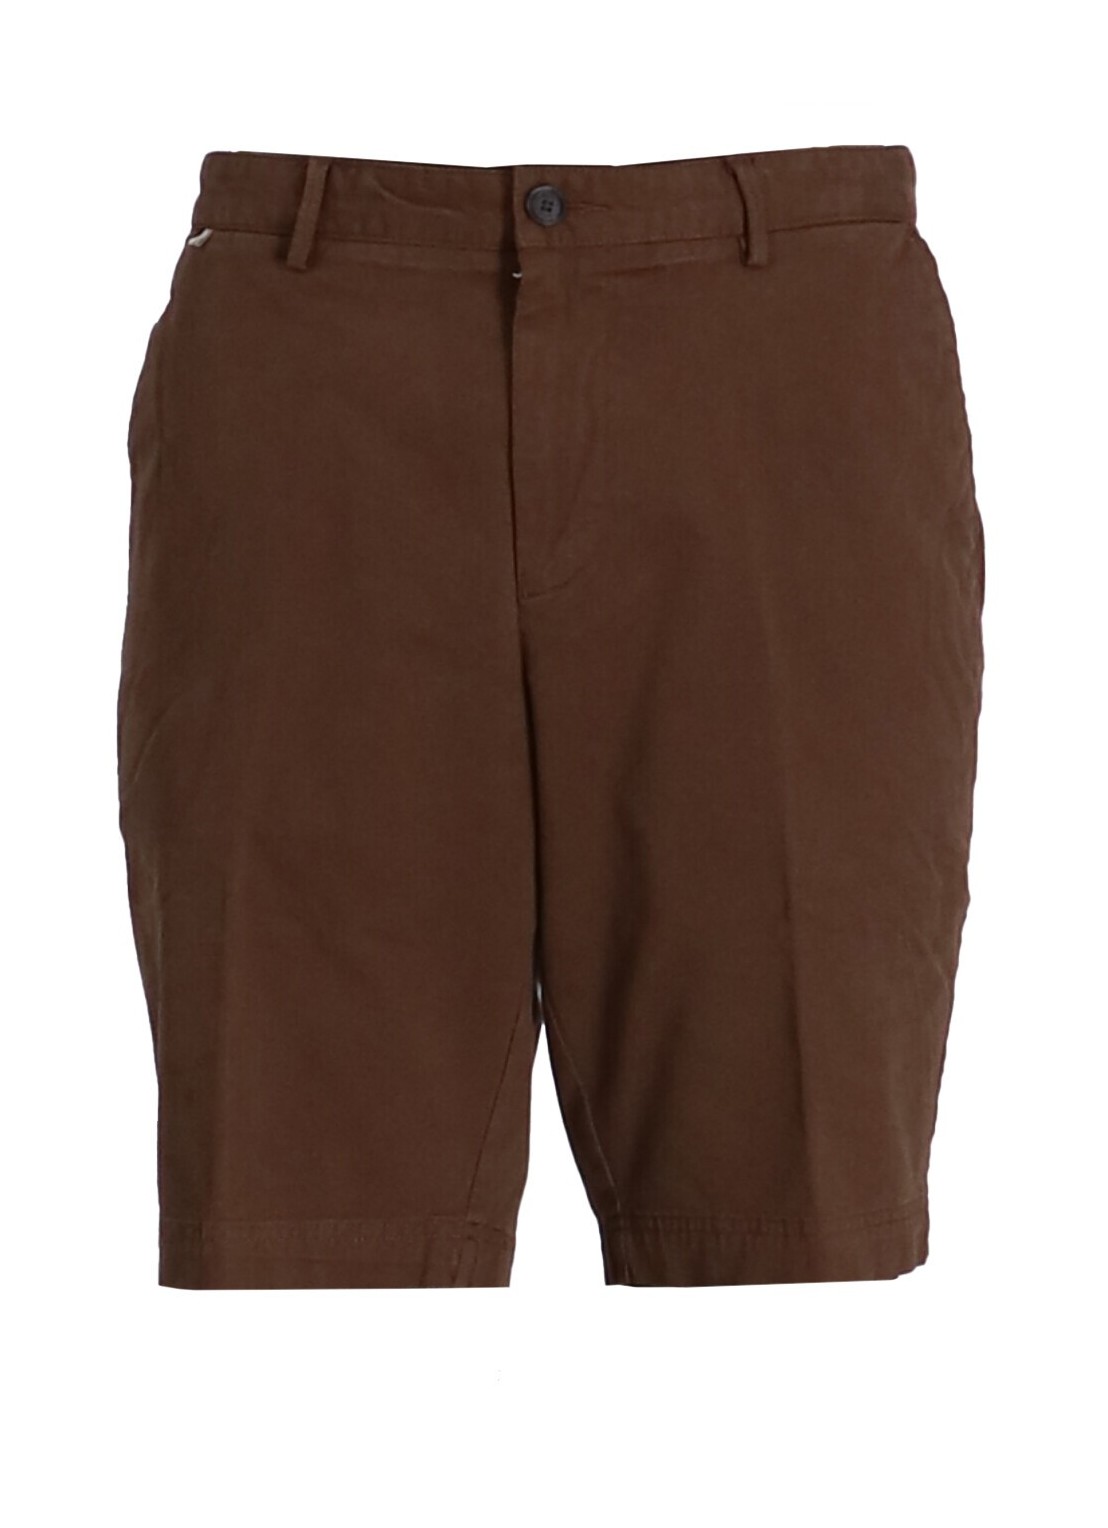 Pantalon corto boss short pant man slice-short 50487993 361 talla 56
 